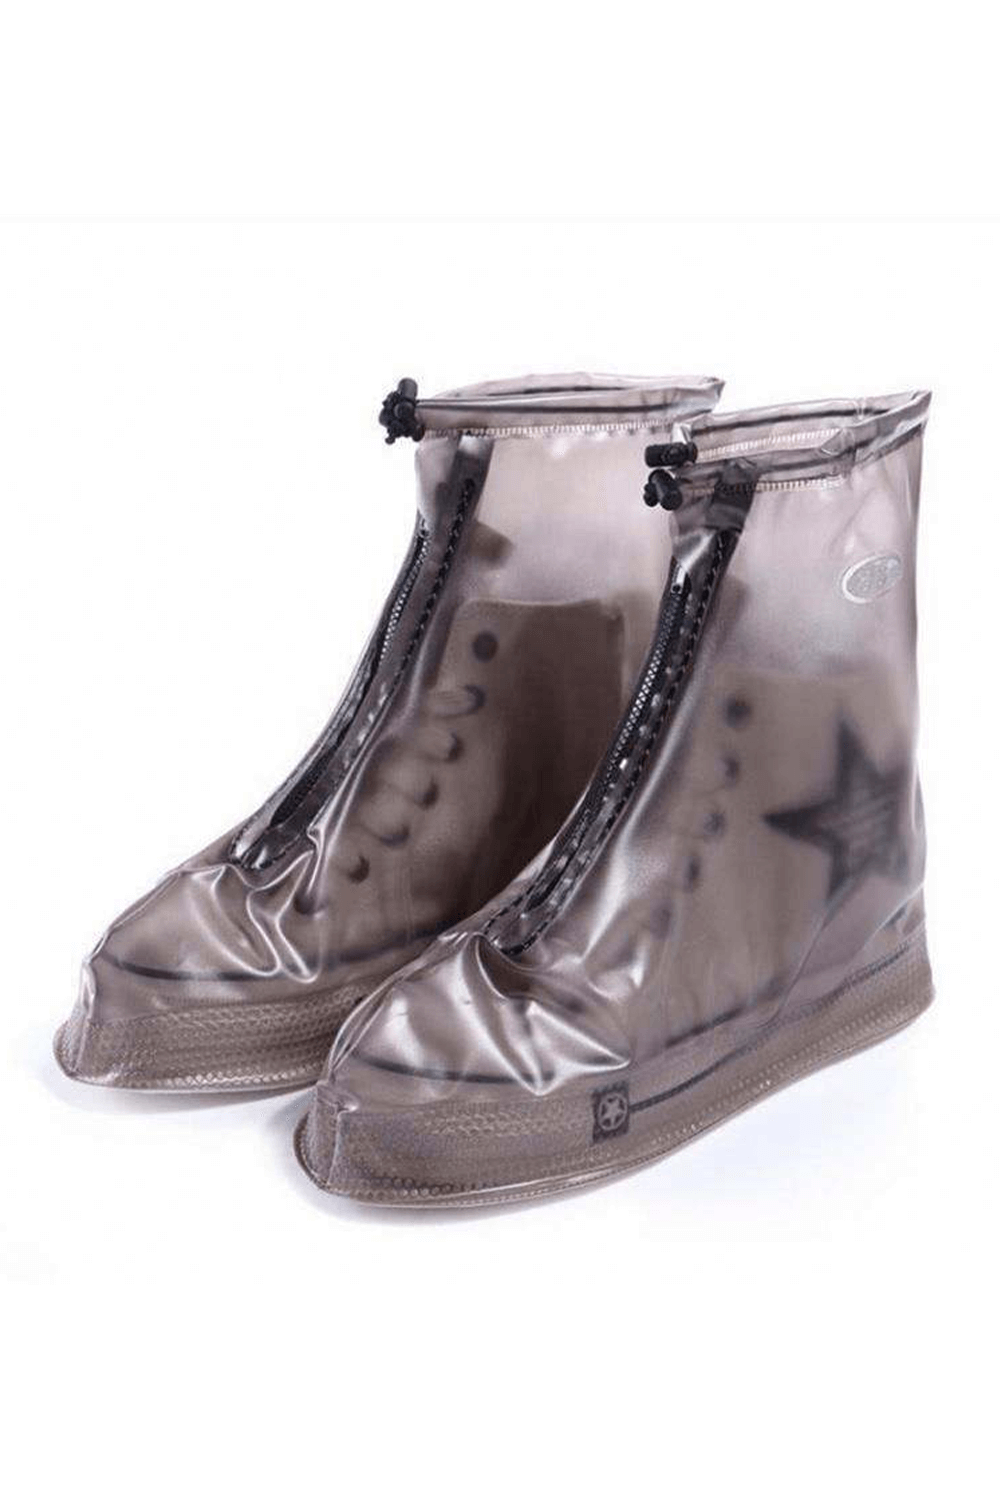 Waterproof Rain Shoe Covers Reusable – Thilakawardhana